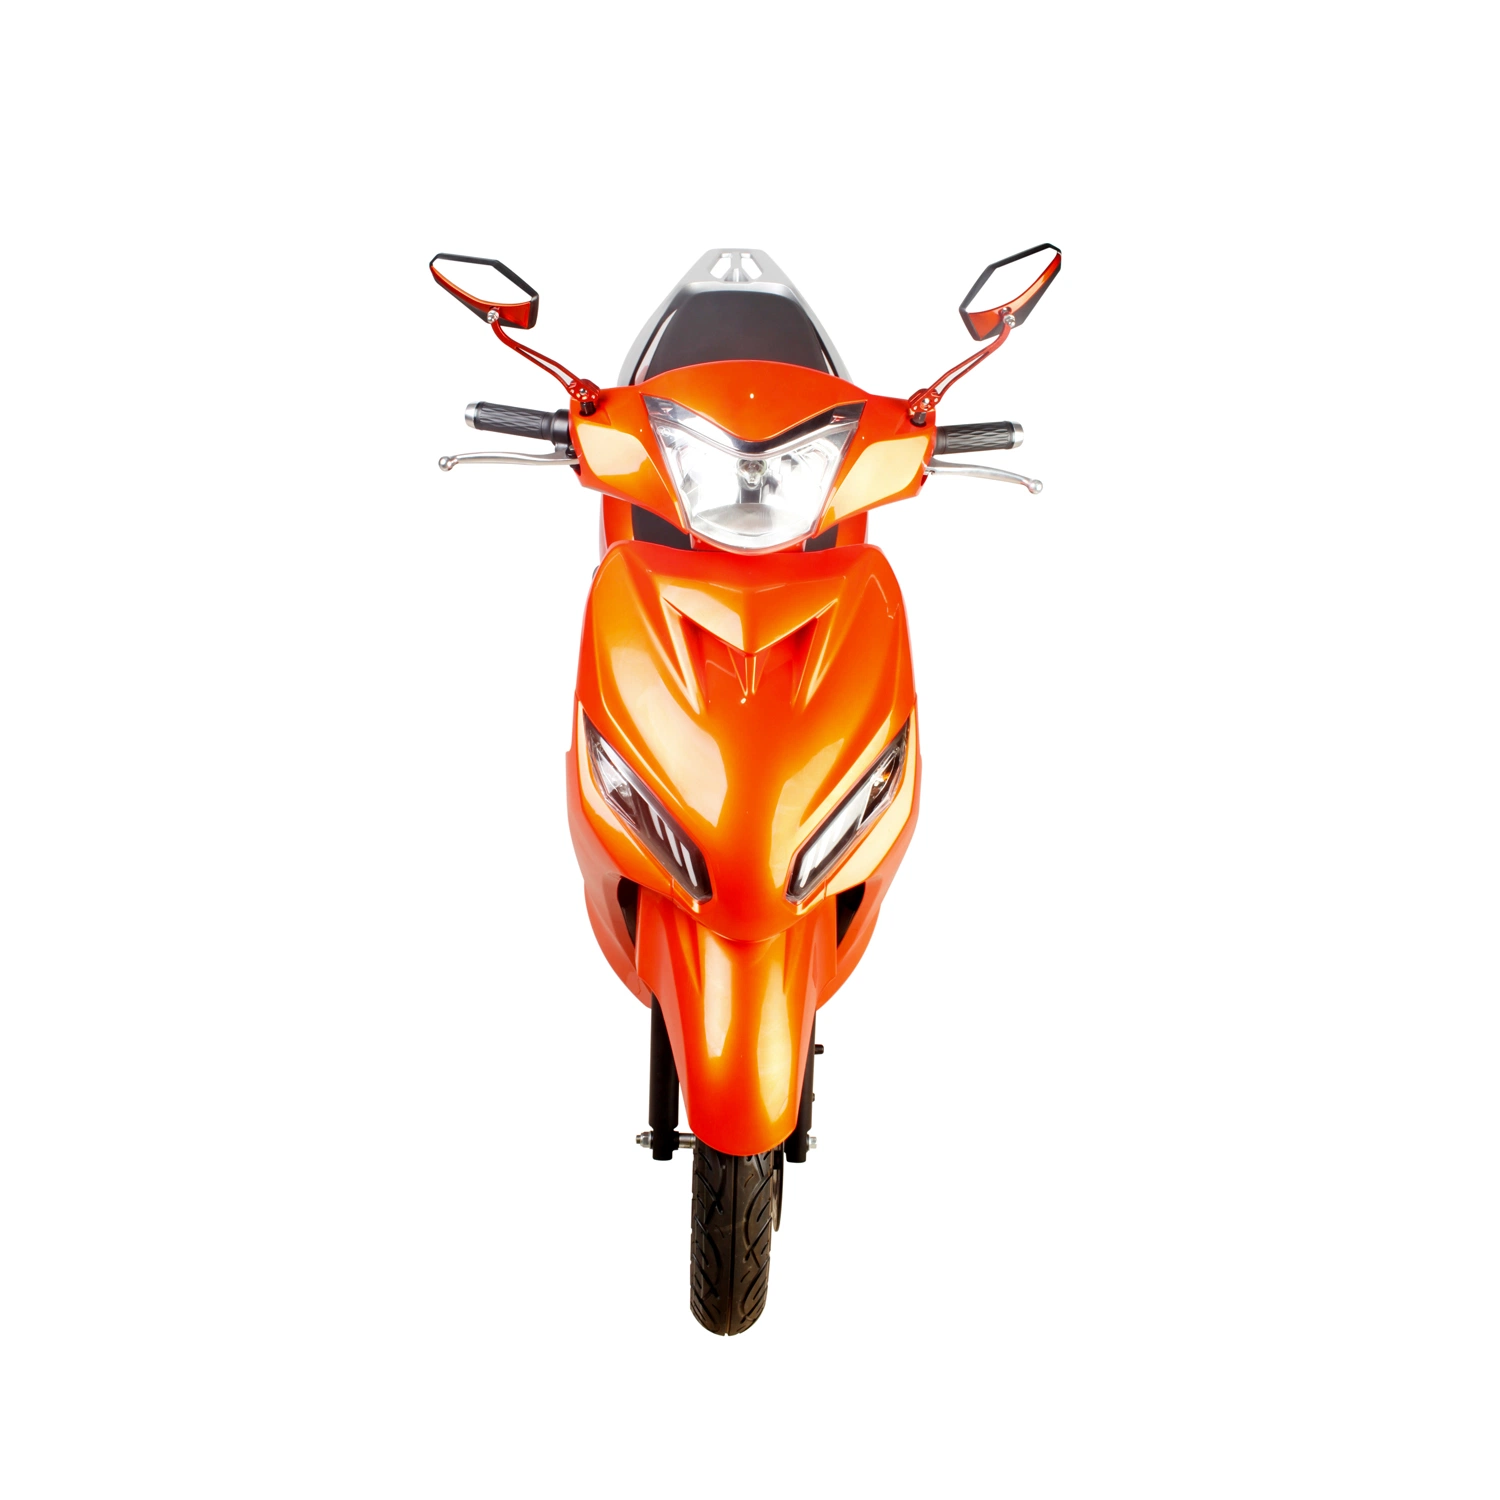 2000W potente moto / scooter eléctrico eléctrico / bicicleta eléctrica (TY)